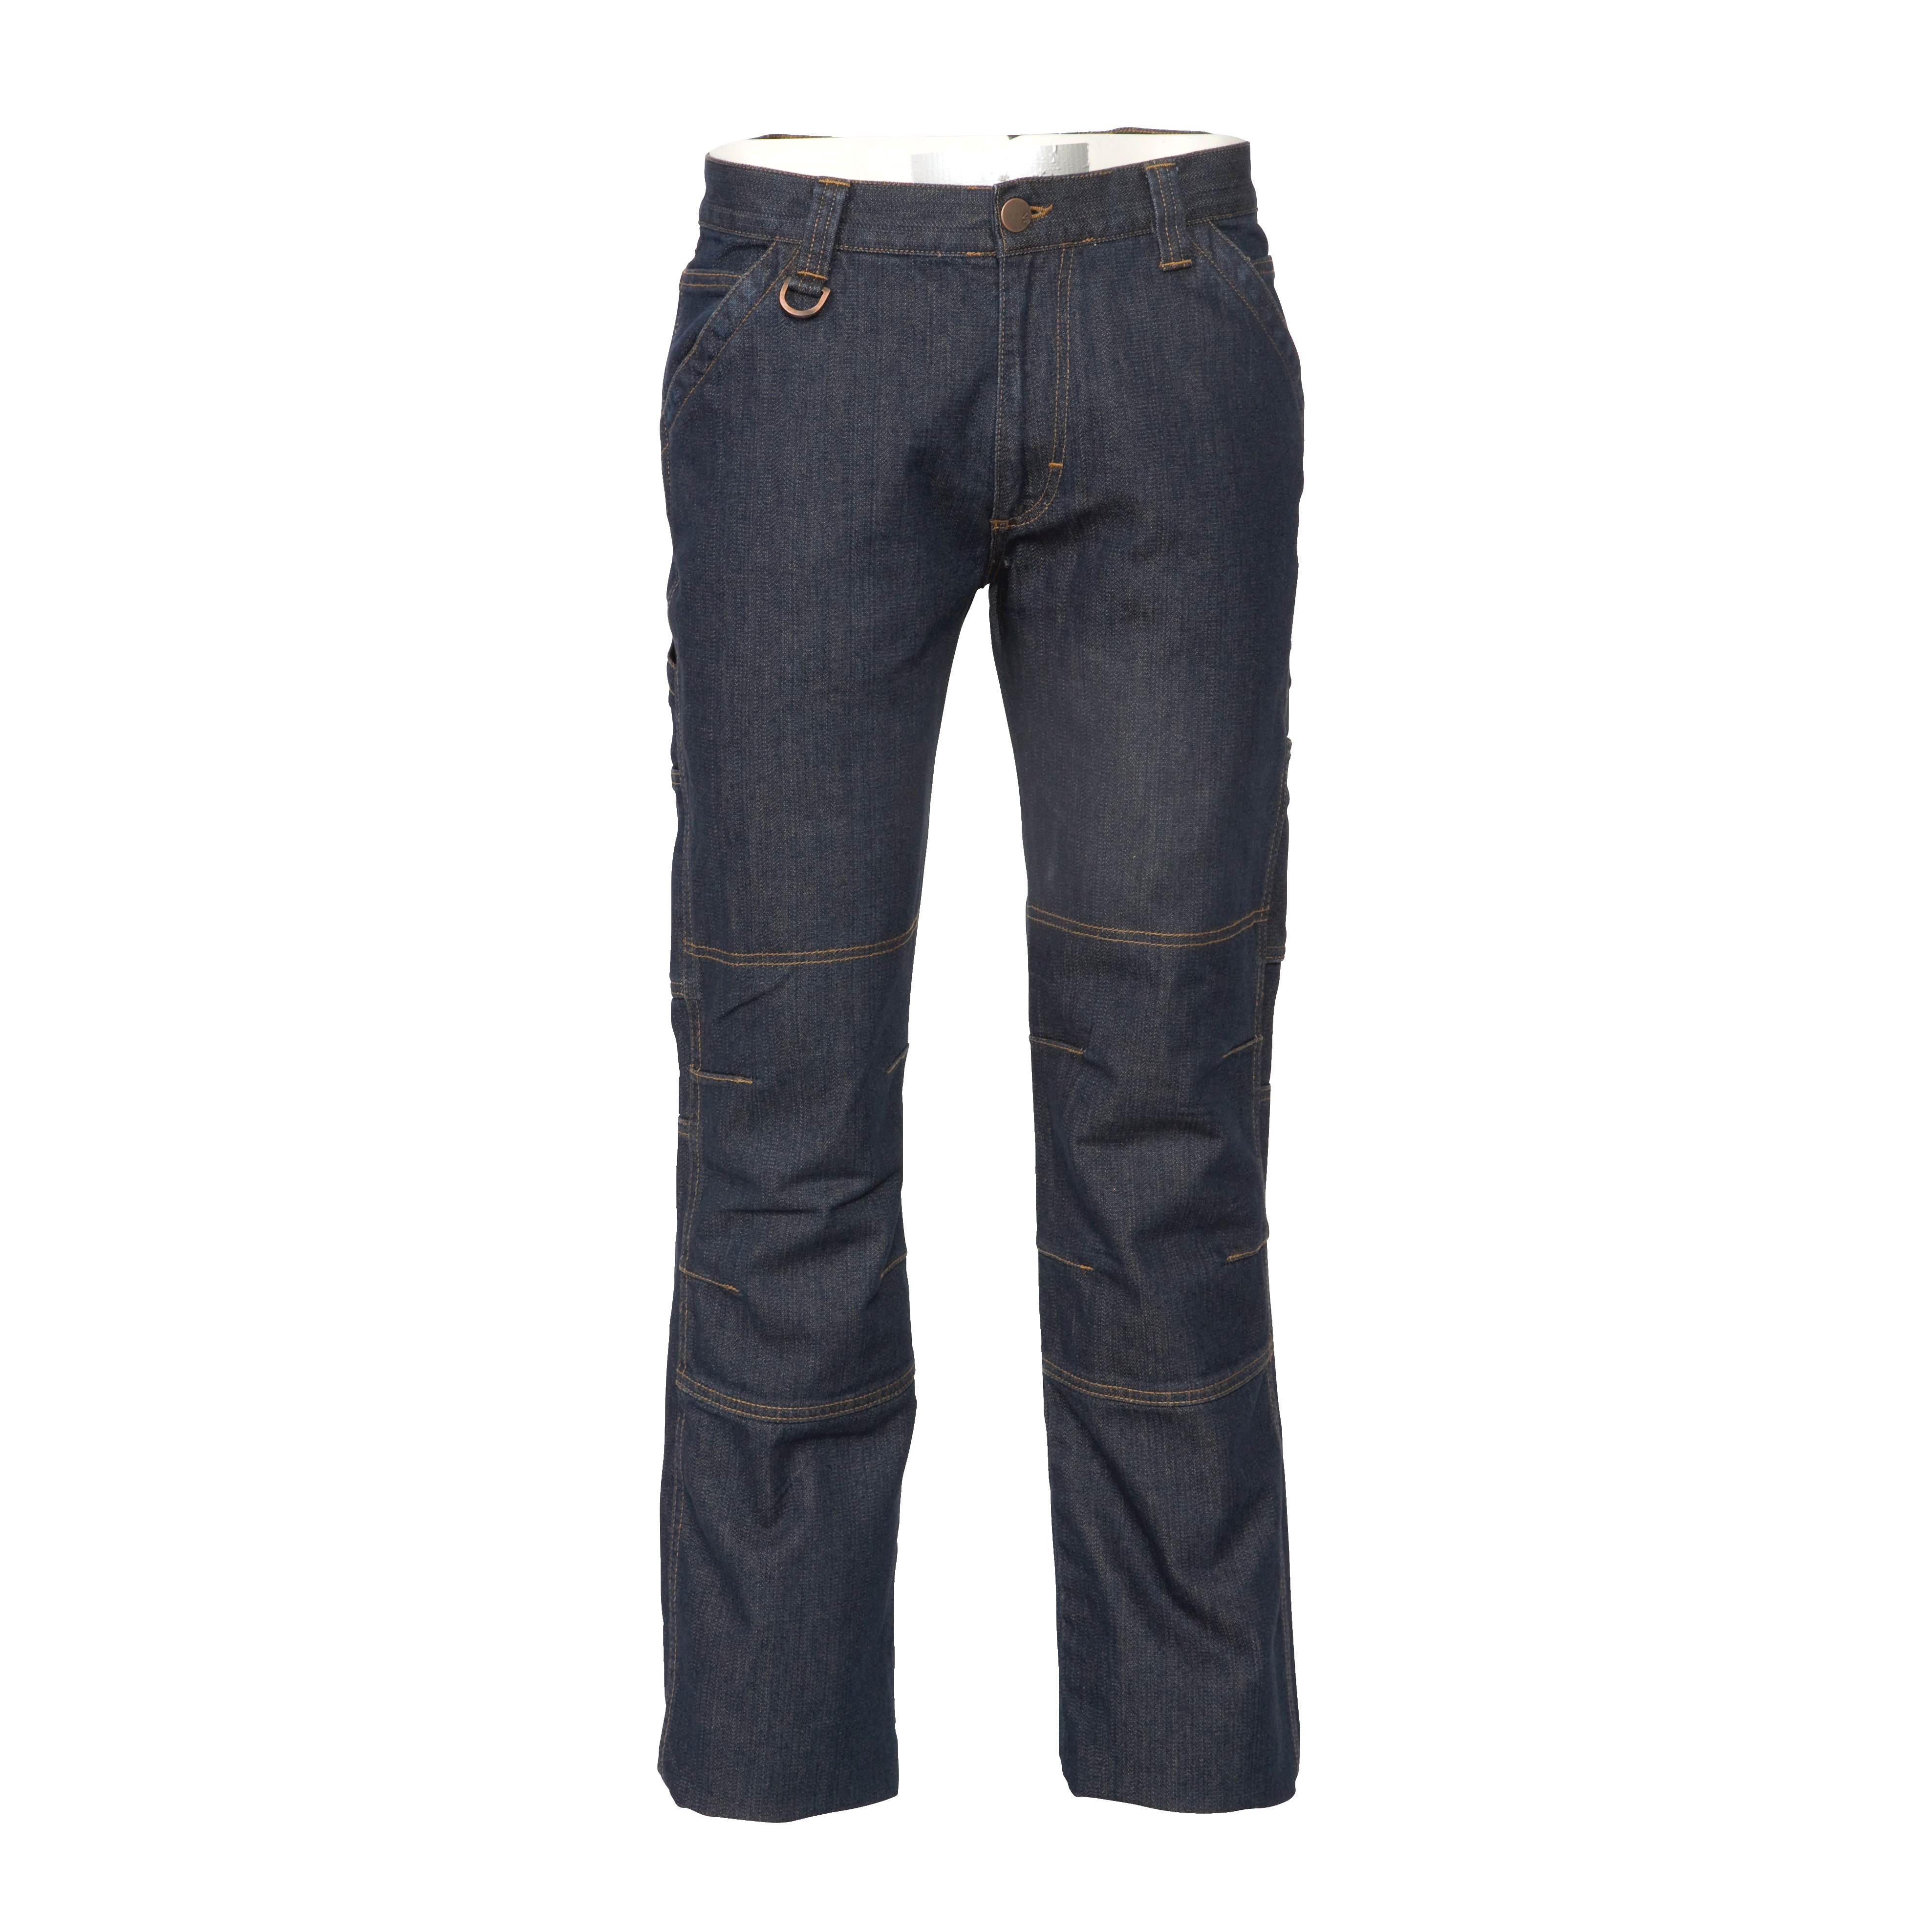 Jeans – Model 8759